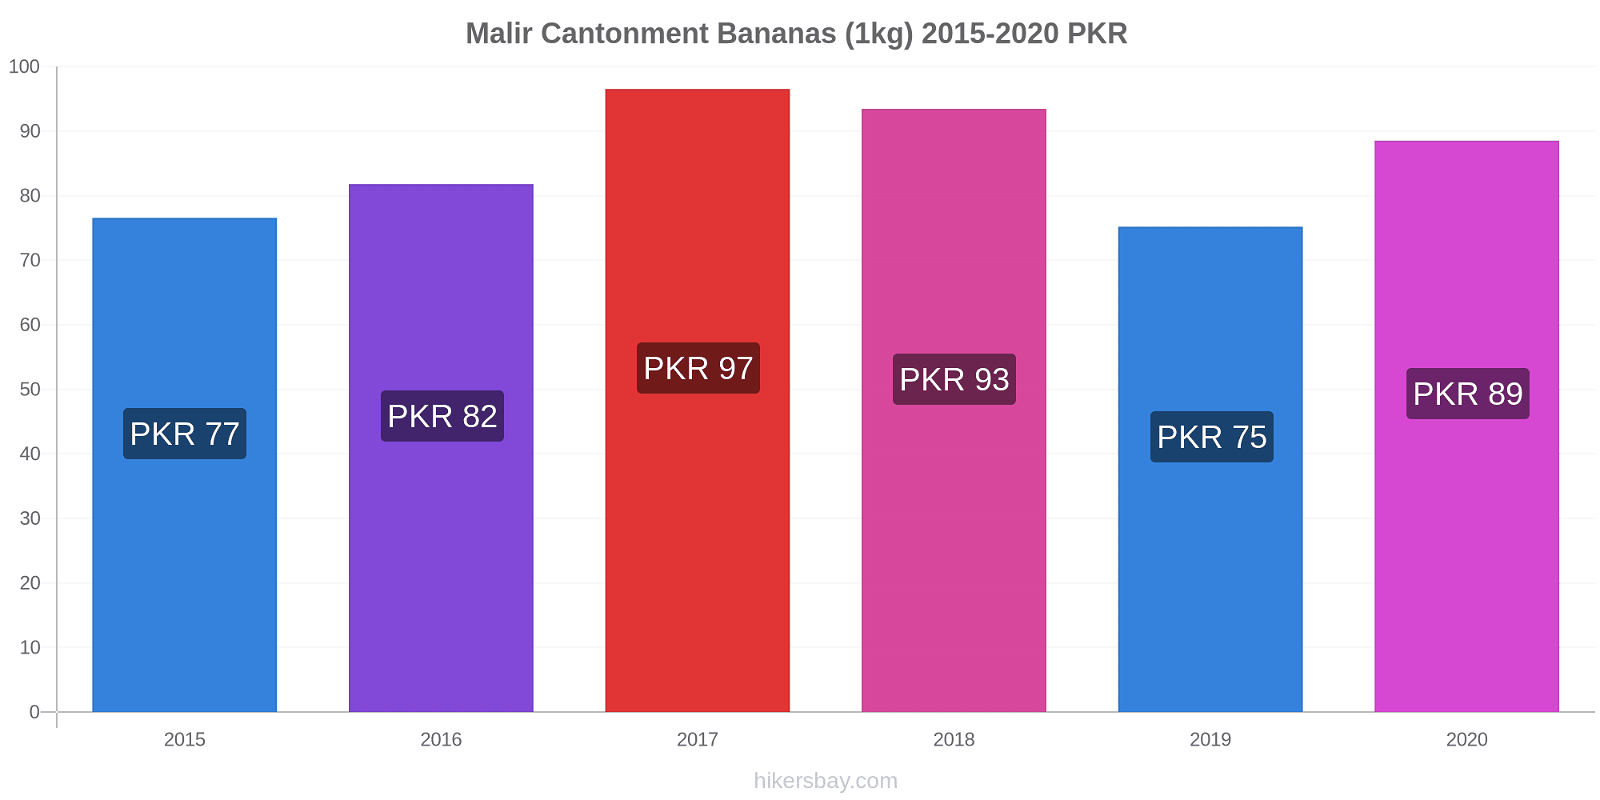 Malir Cantonment price changes Bananas (1kg) hikersbay.com